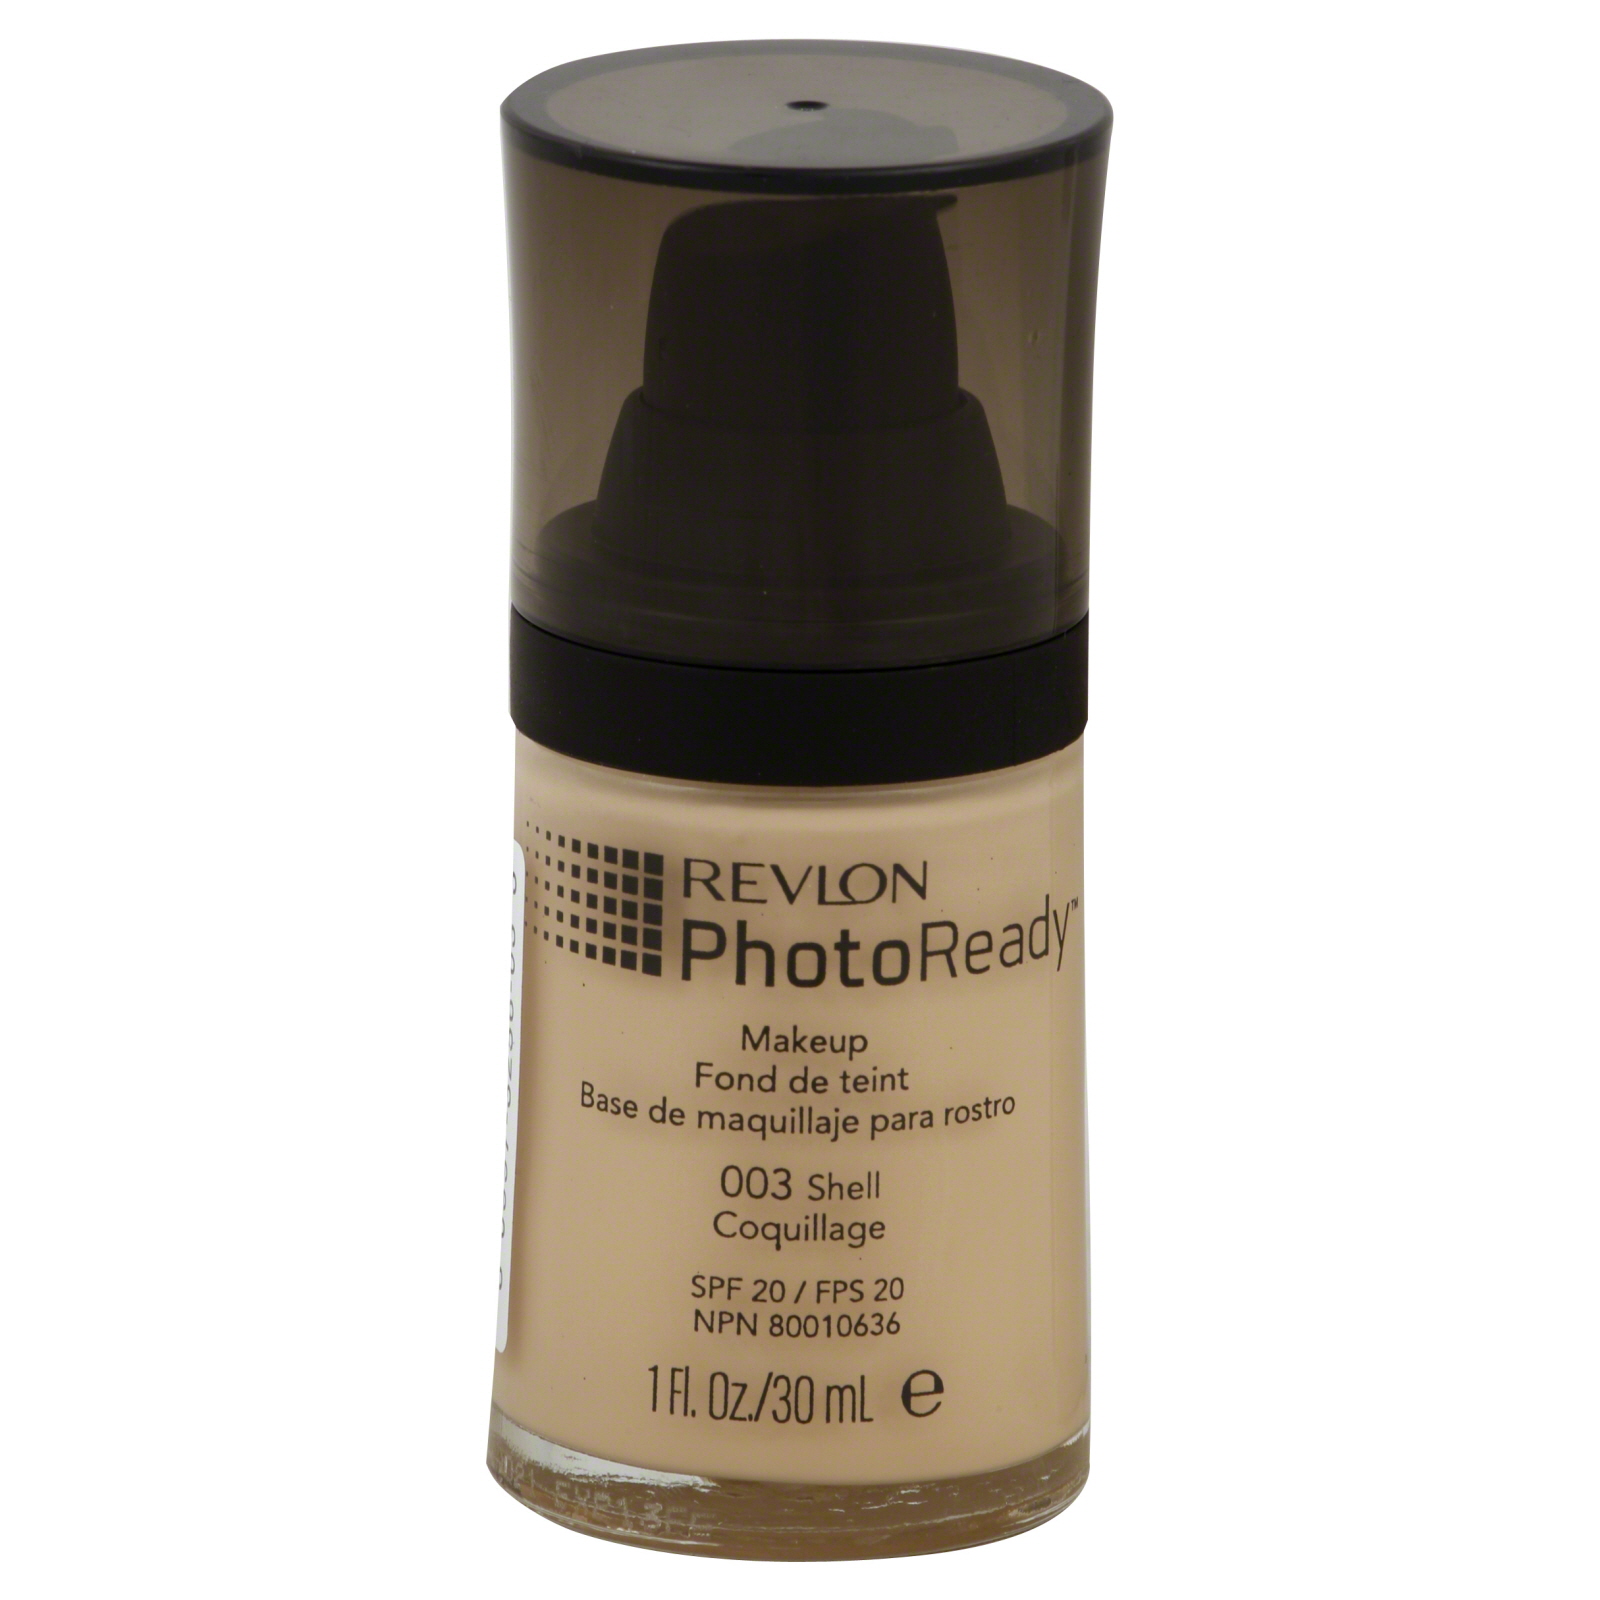 Revlon PhotoReady Makeup, Shell 003, 1 fl oz (30 ml)